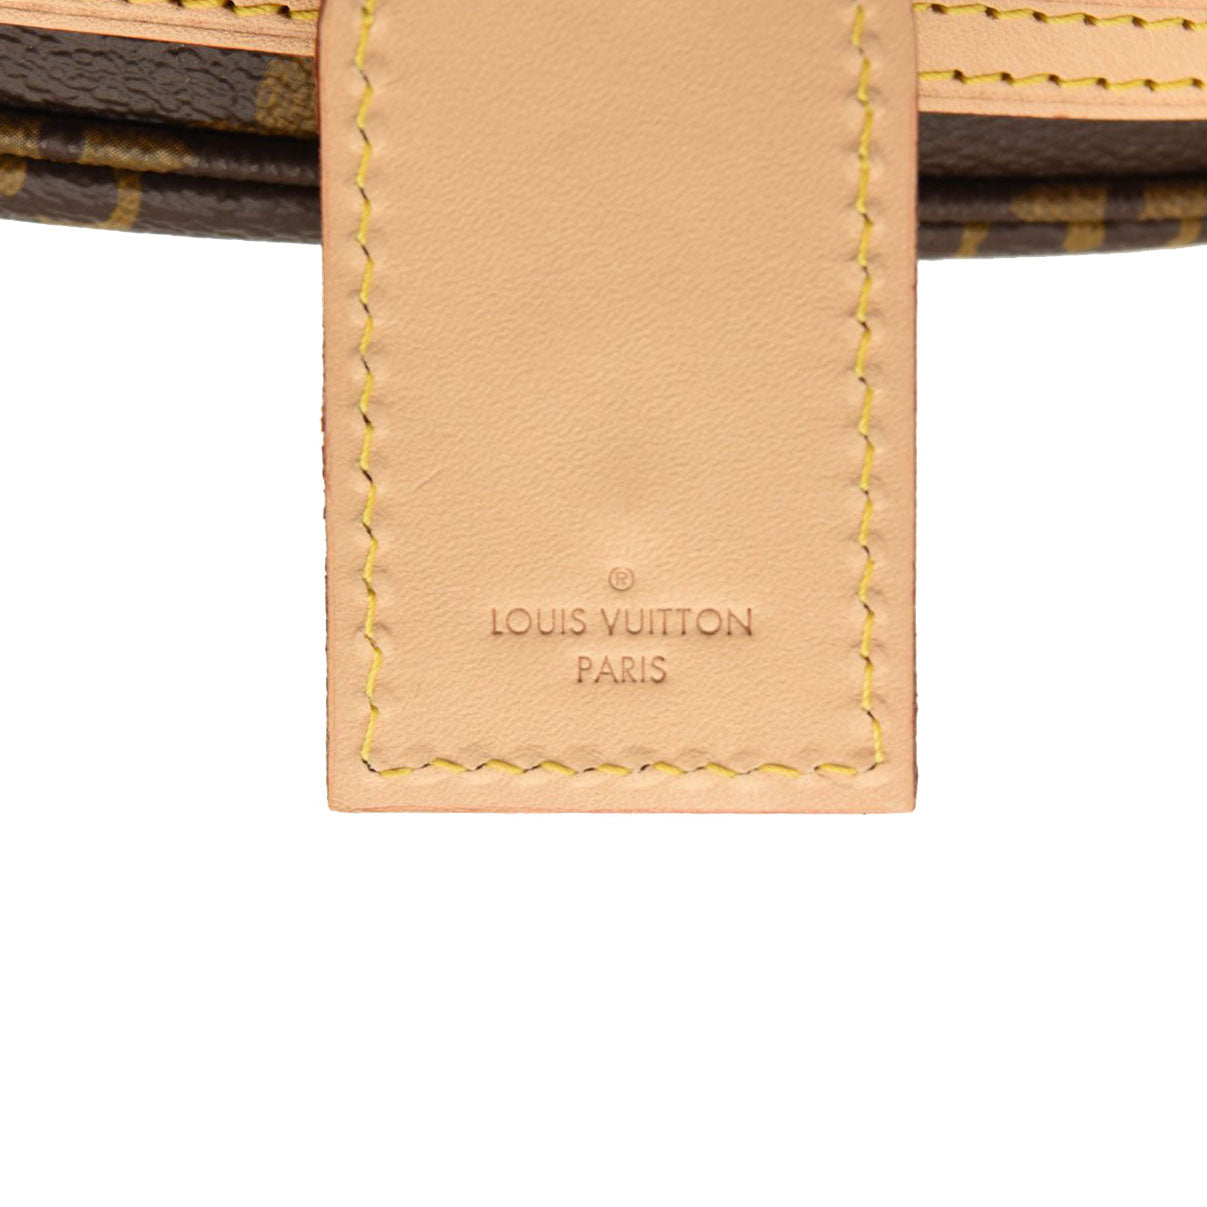 Splendid Louis Vuitton Alma bag in monogram canvas and natural